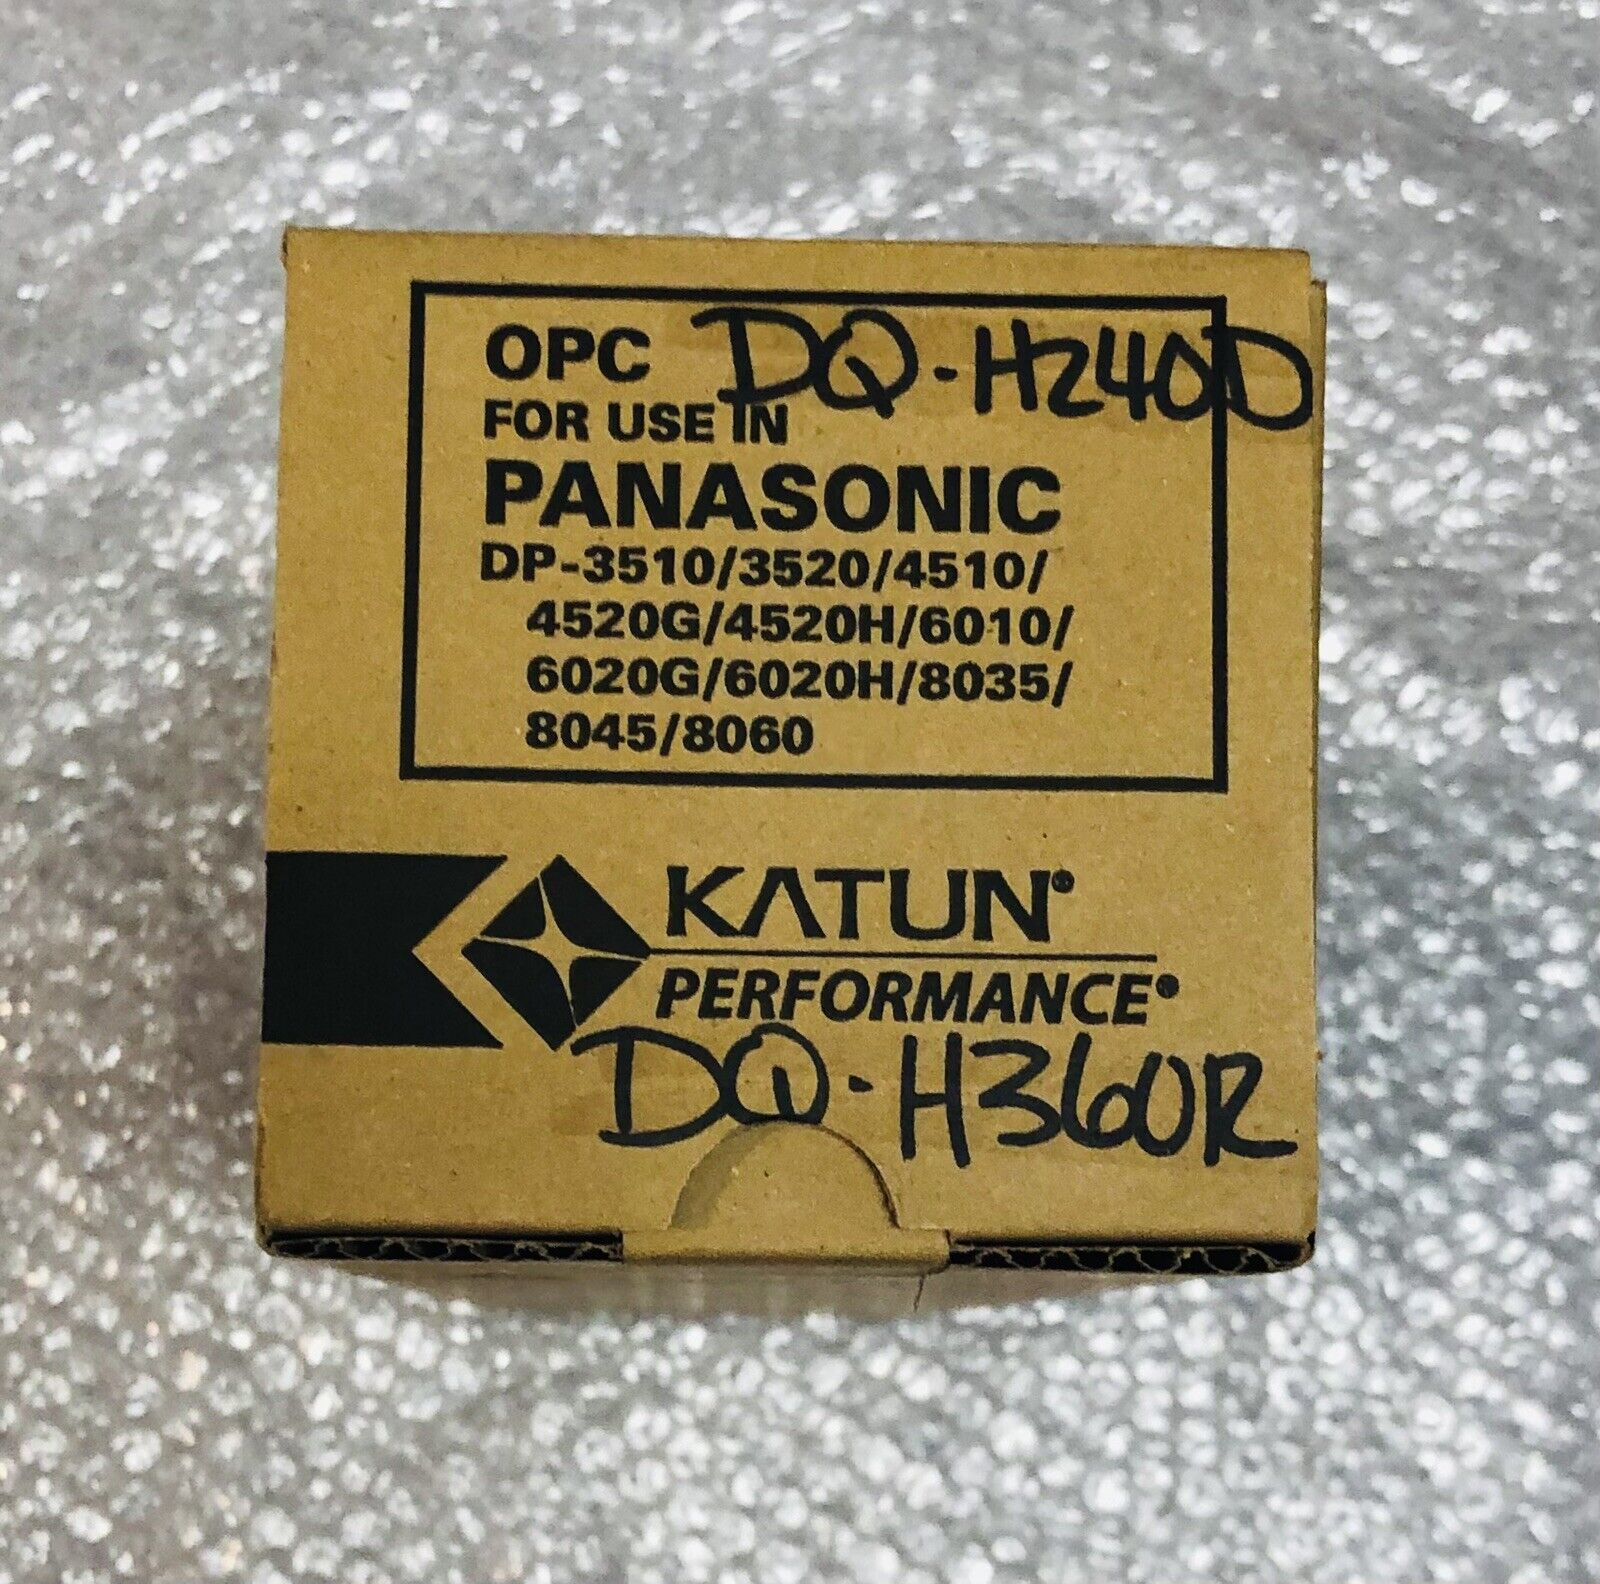 NEW Katun OPC Drum Unit DQ-H240D (DQ-H360R) Compatible With Panasonic Models